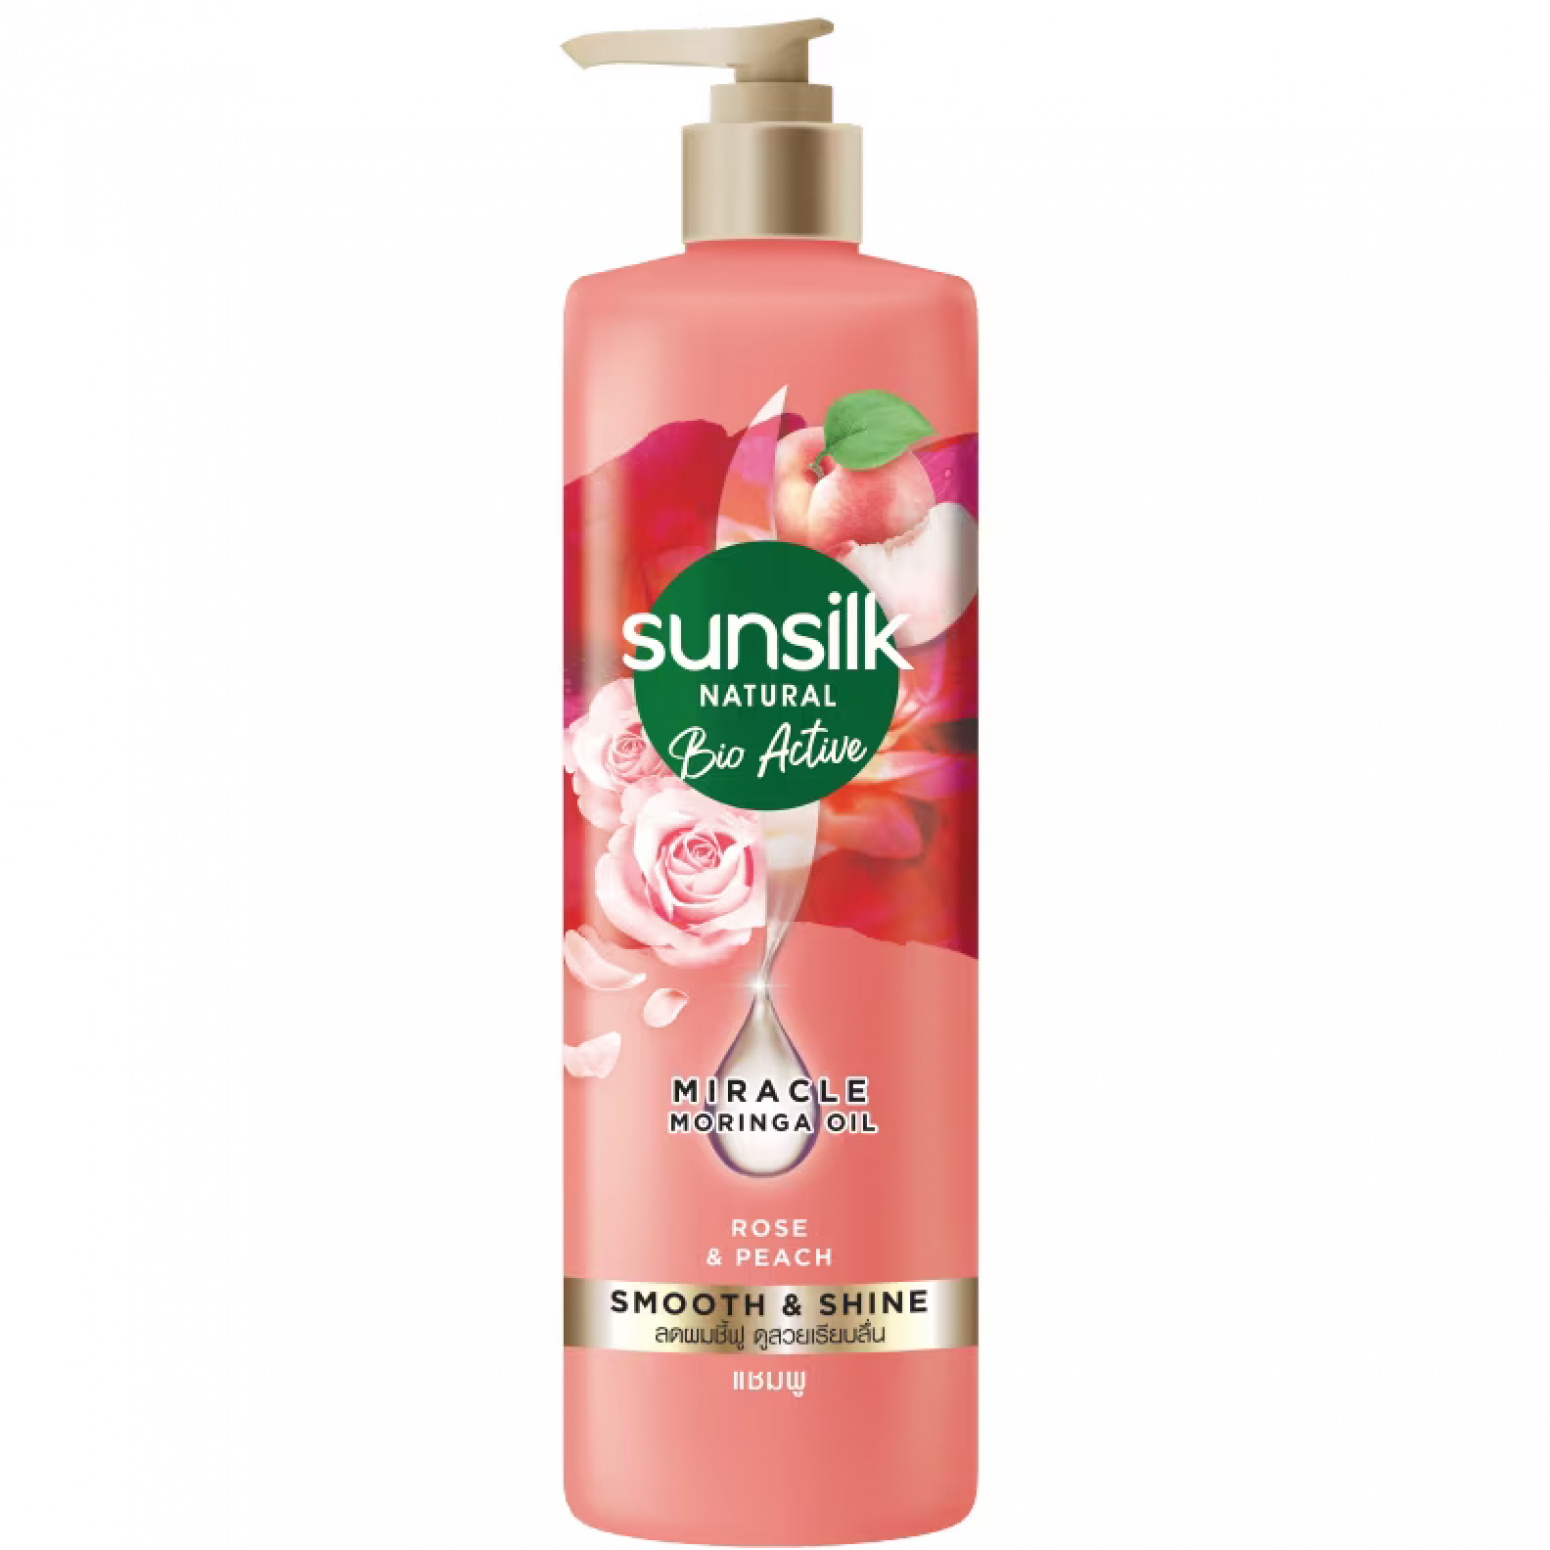 Sunsilk Natural Bio Active Rose and Peach Shampoo 380ml.